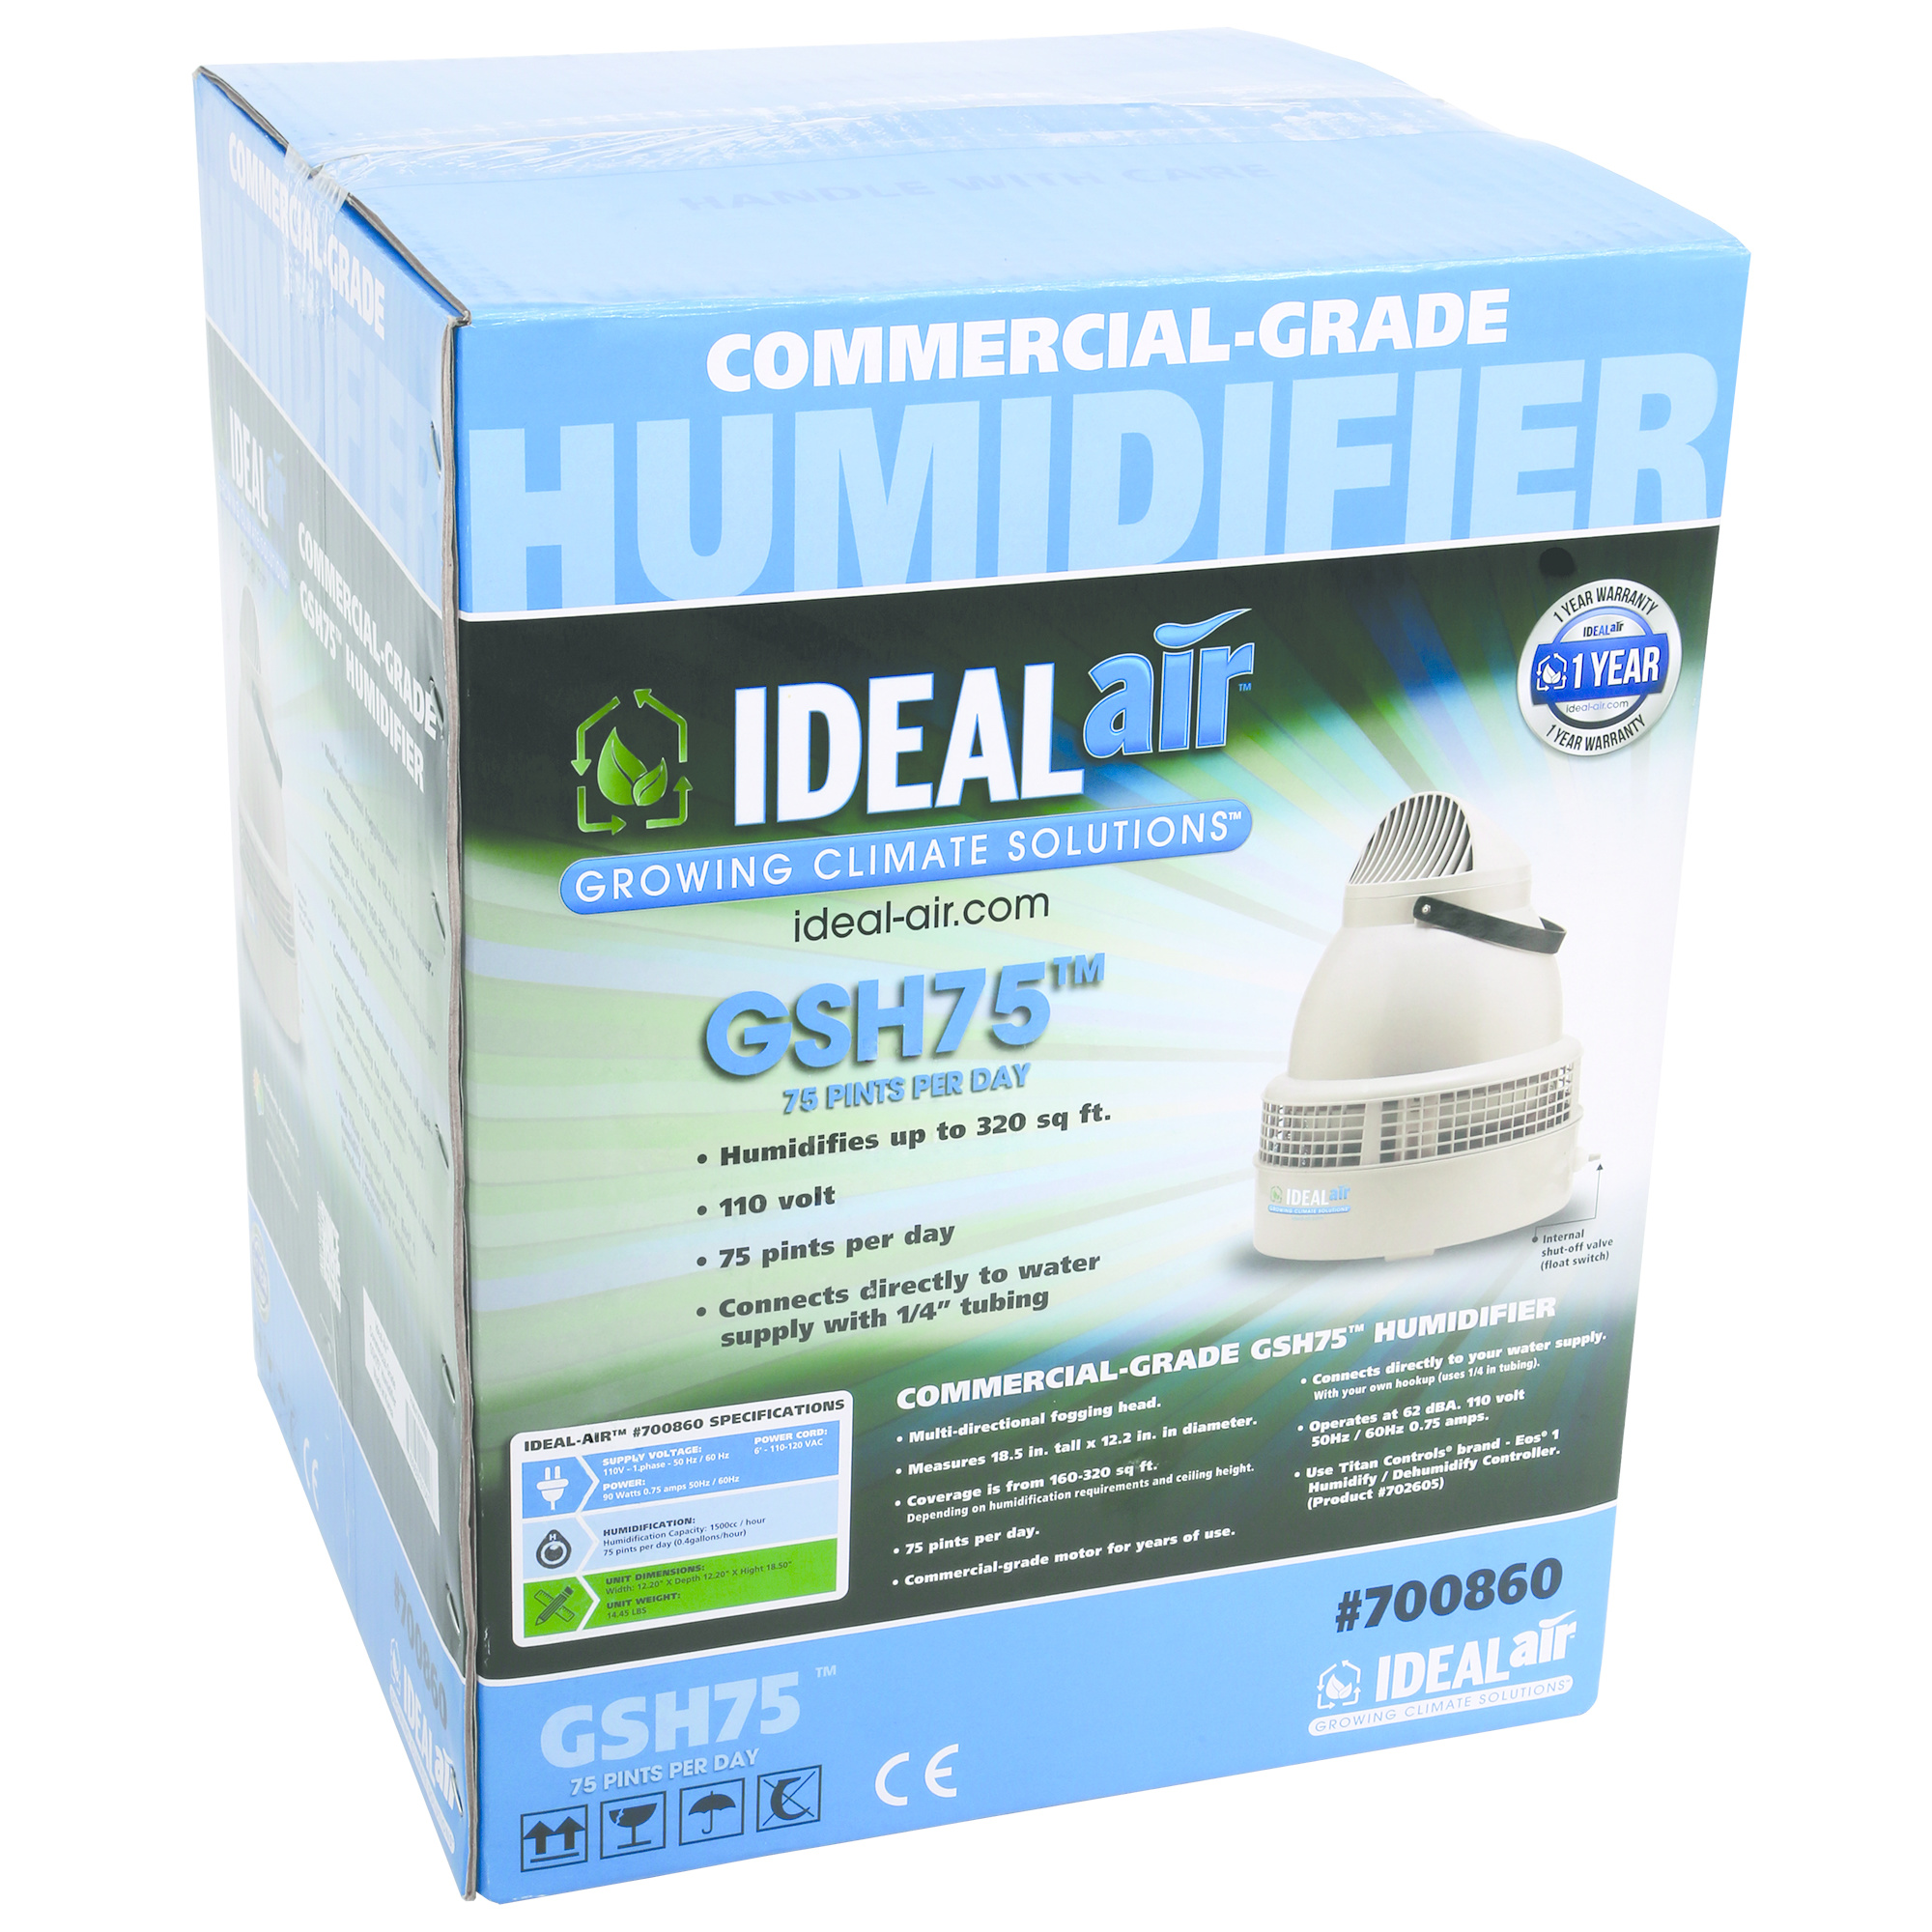 HUMIDIFIER Ideal Air GSH75 (75 pint per day) 110v